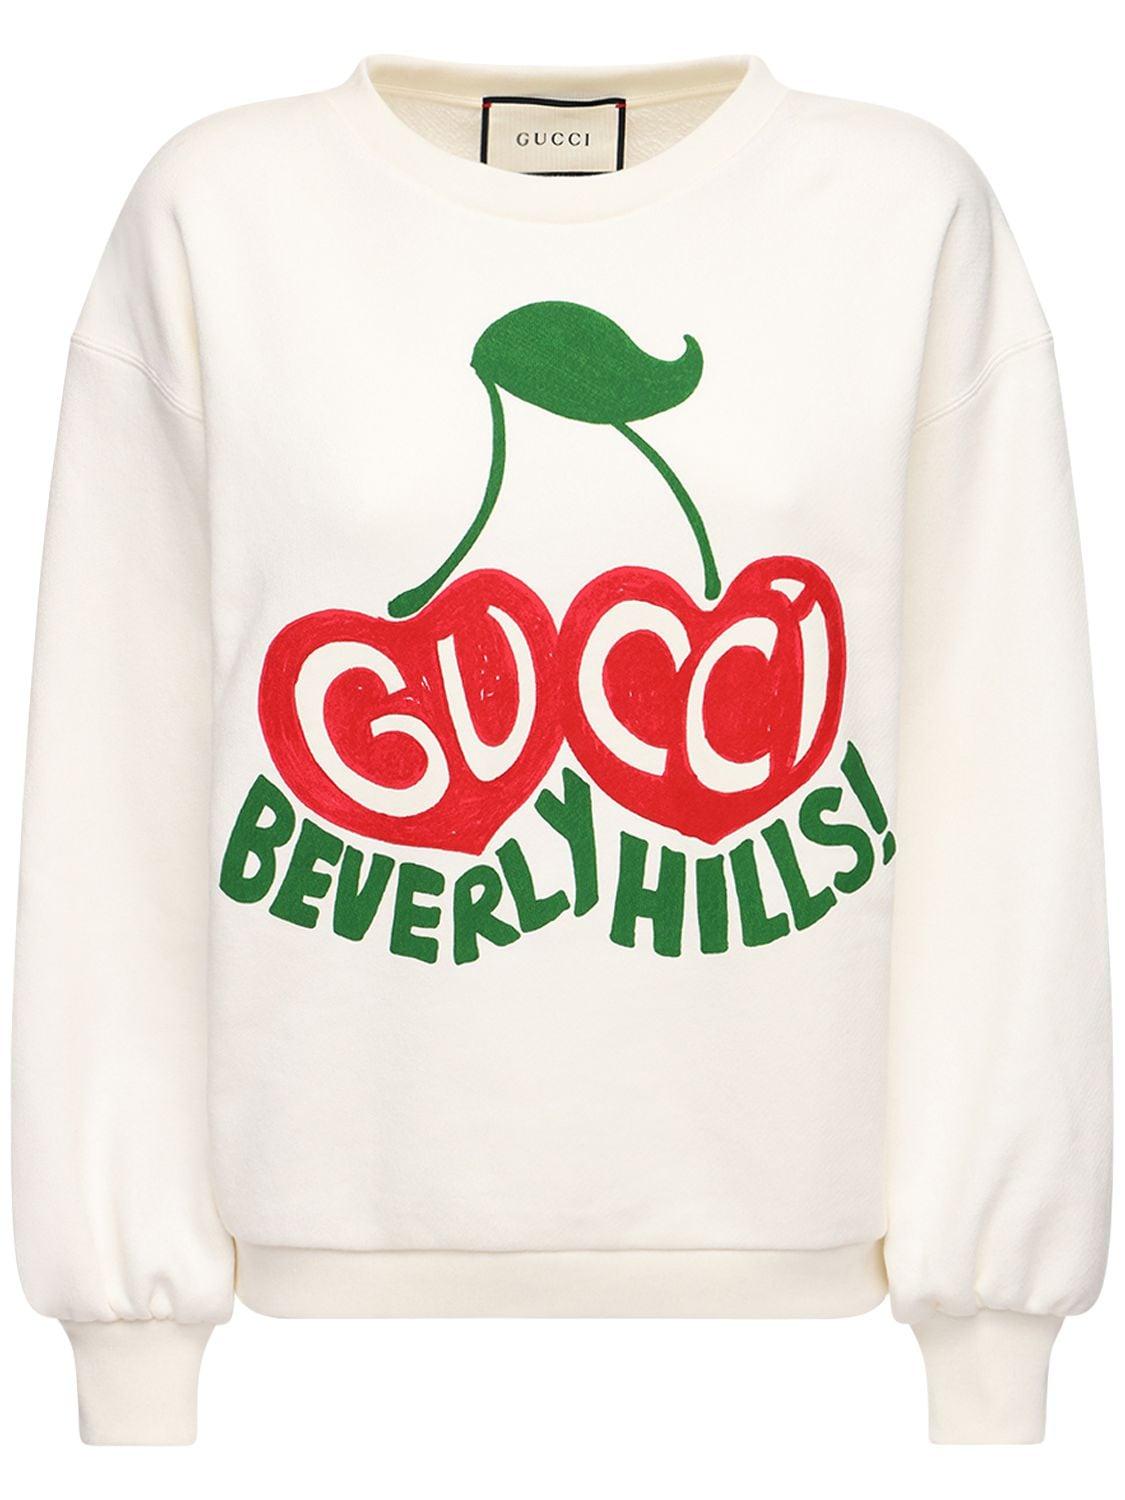 Forløber fordøjelse Gensidig Gucci "beverly Hills" Cherry Print Sweatshirt in White | Lyst